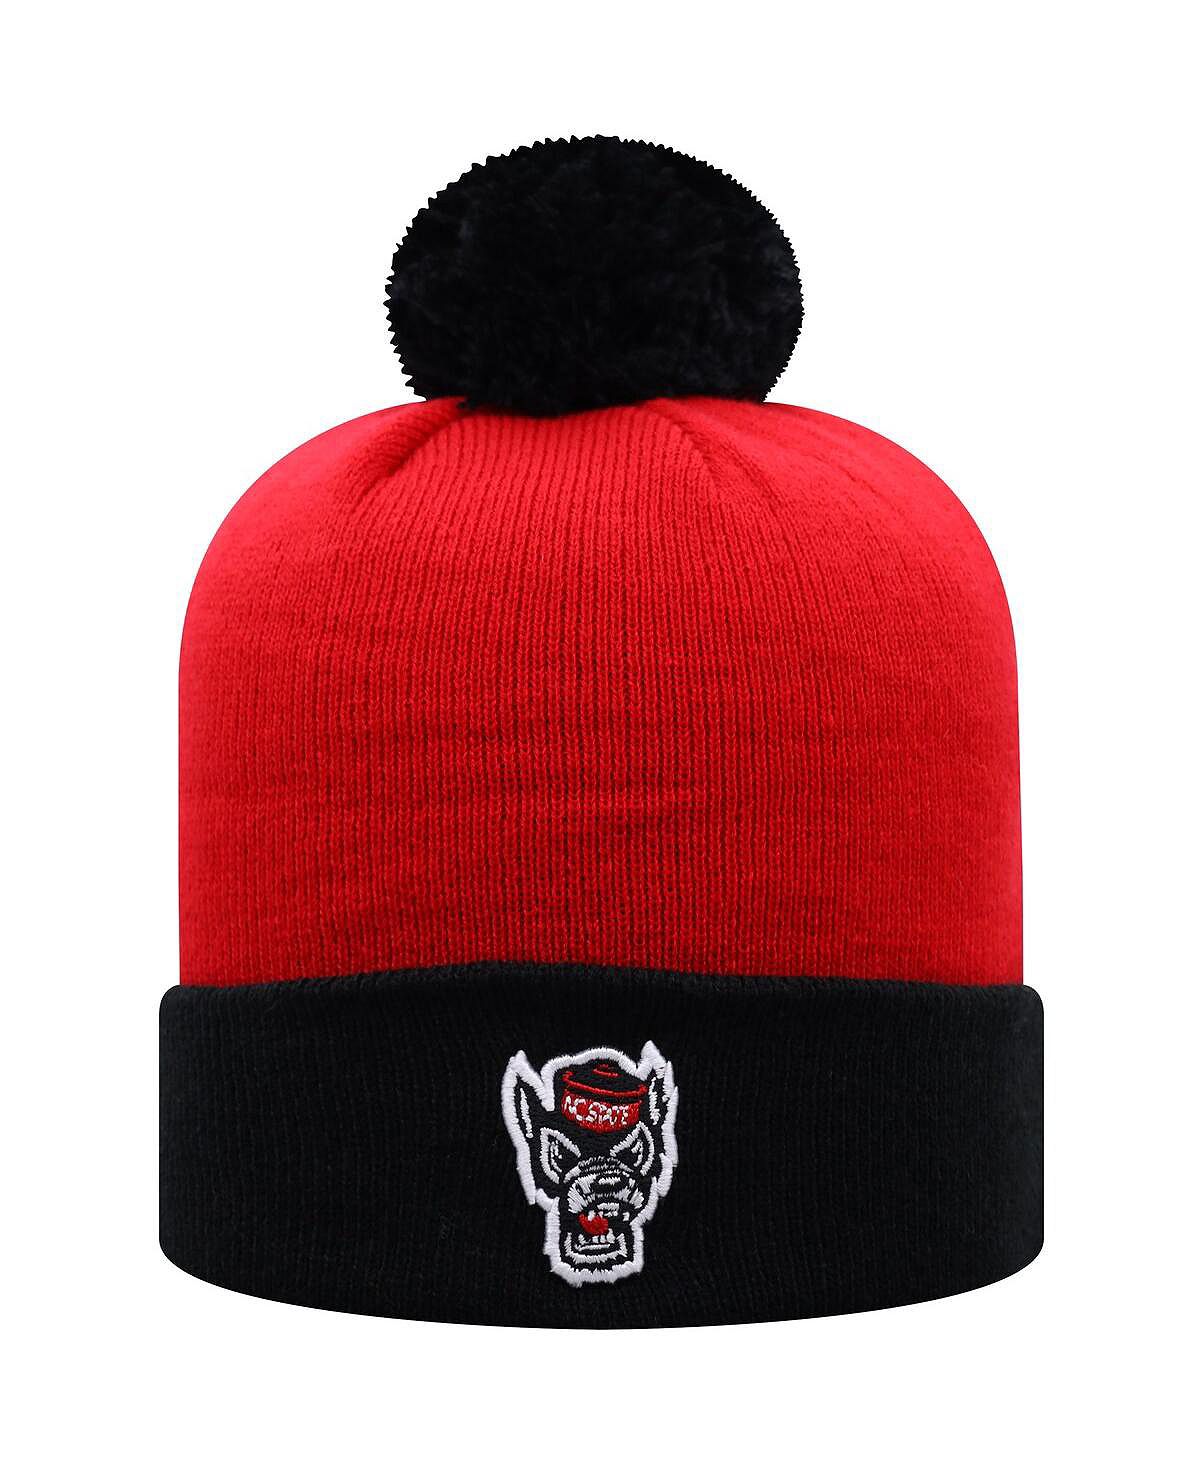 Мужская красно-черная двухцветная вязаная шапка с манжетами и помпоном NC State Wolfpack Core Top of the World